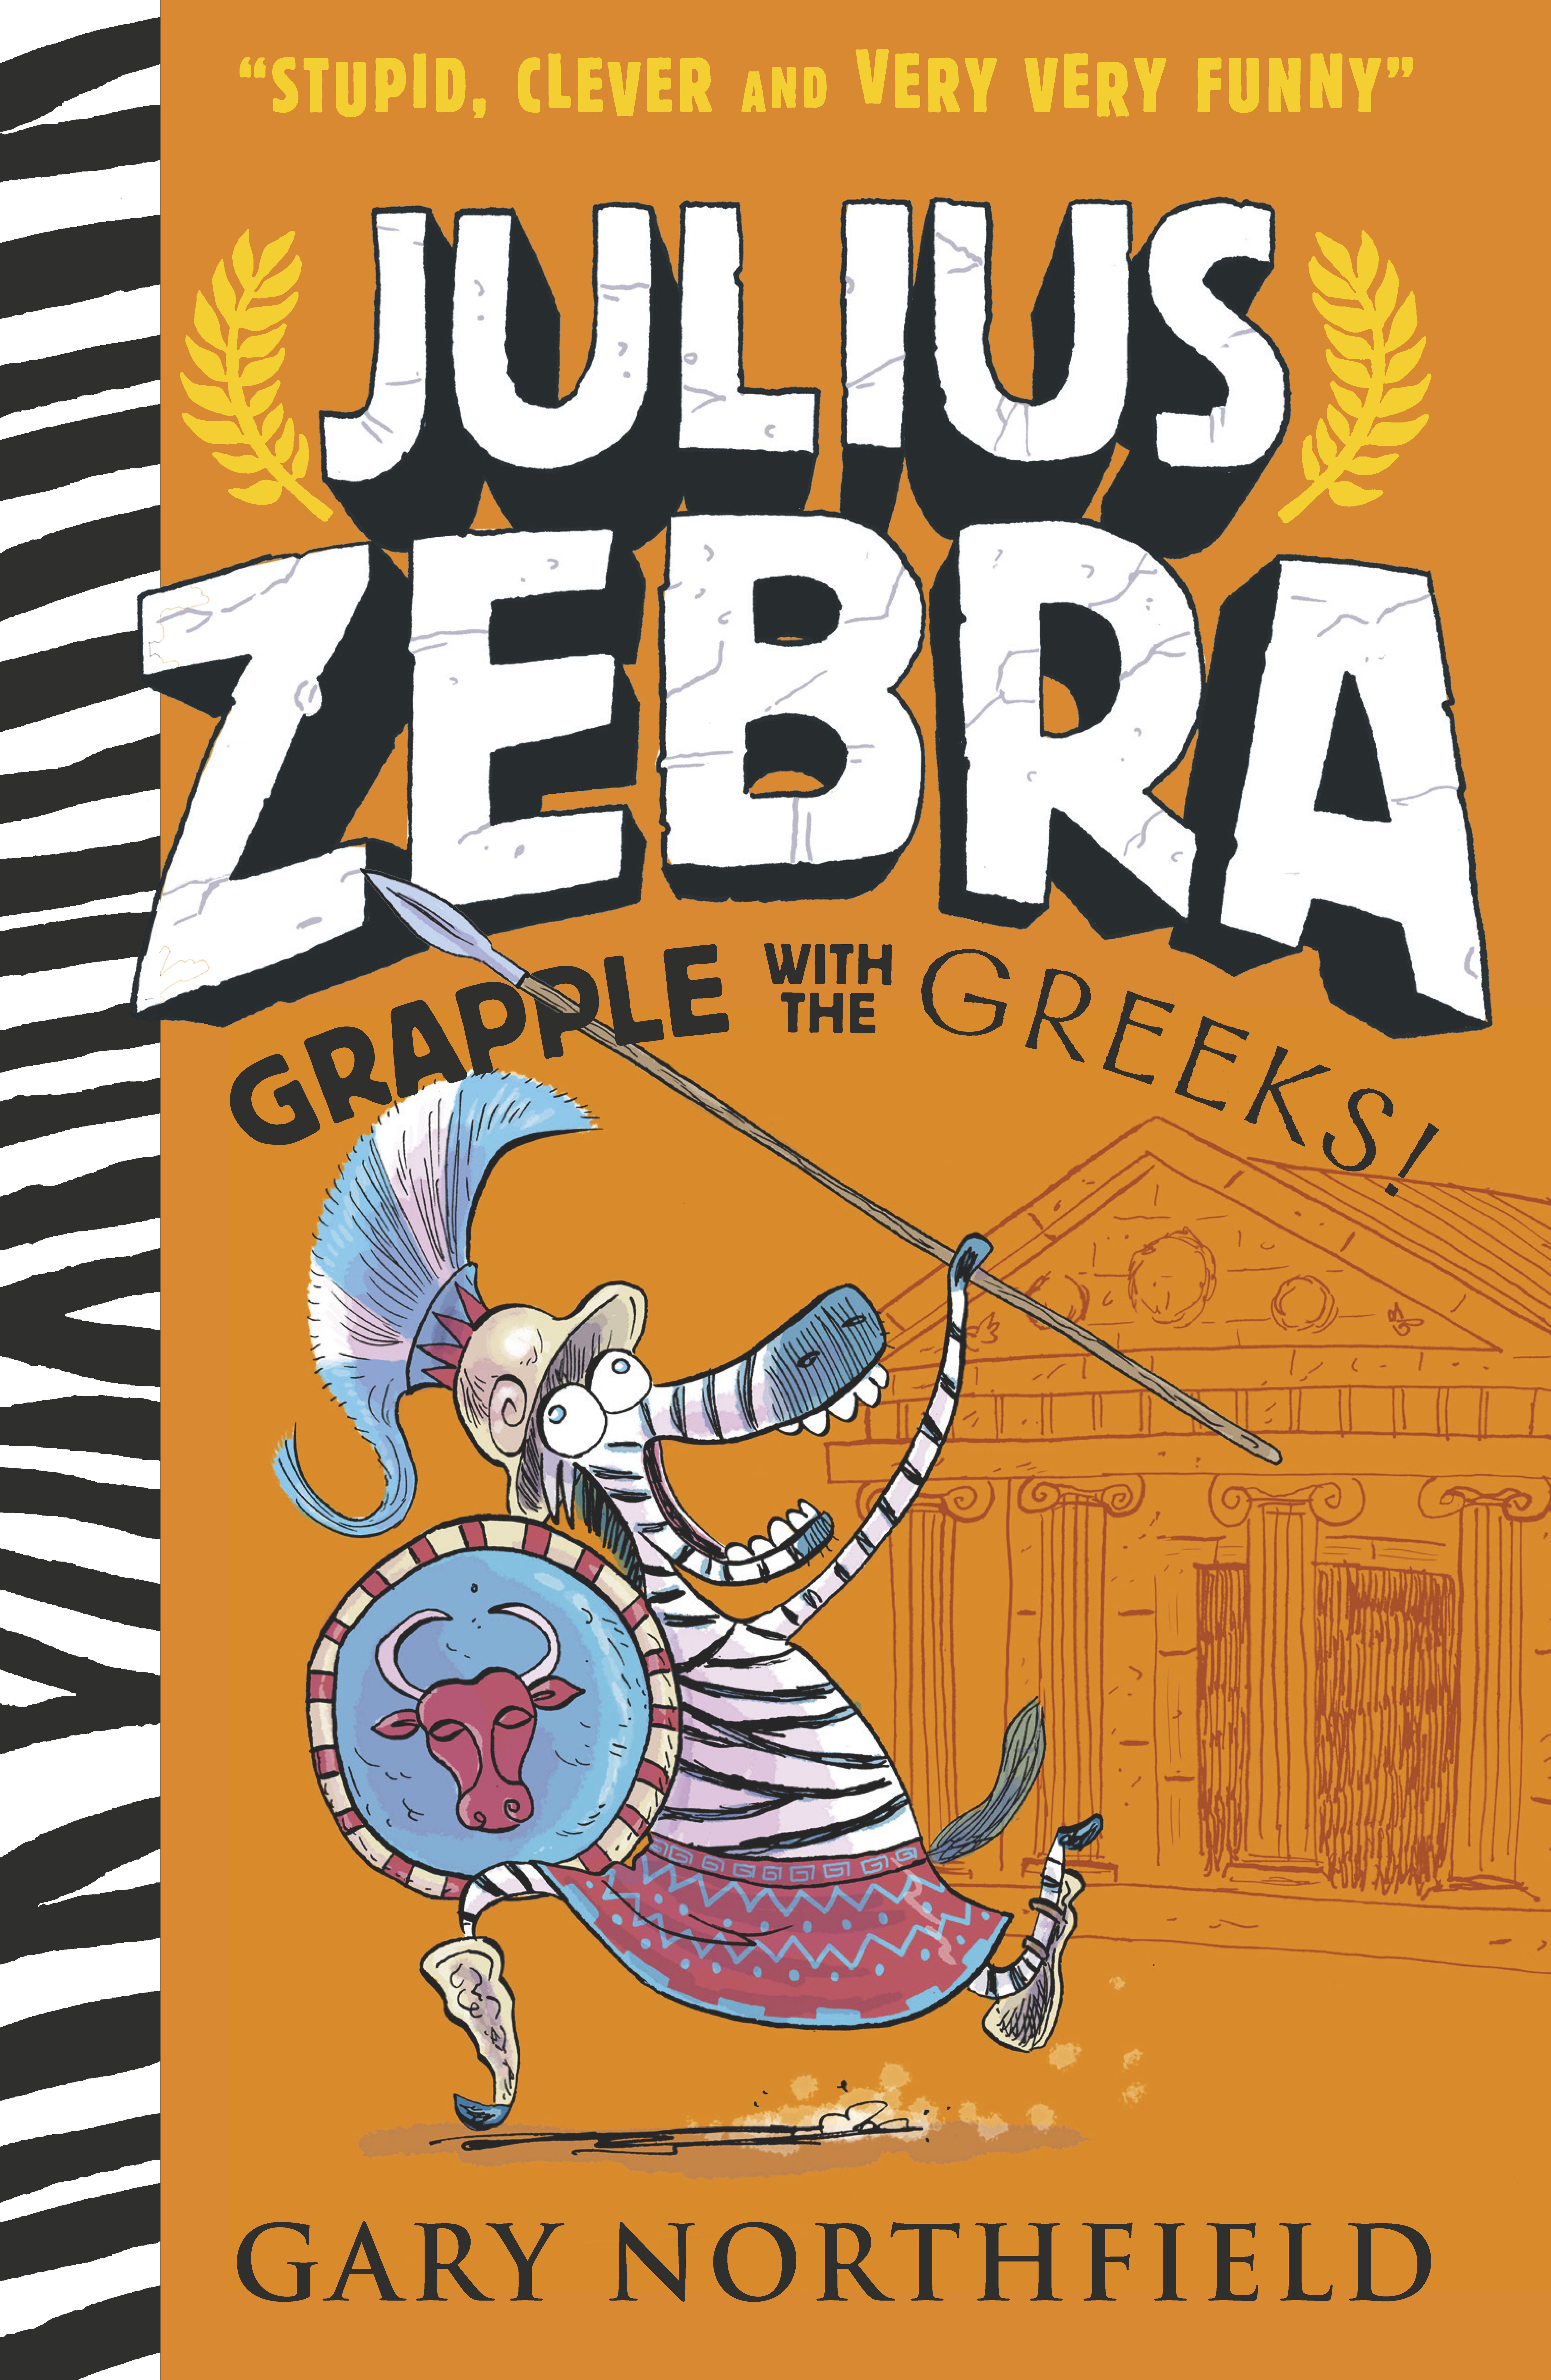 Julius-Zebra-Grapple-with-the-Greeks